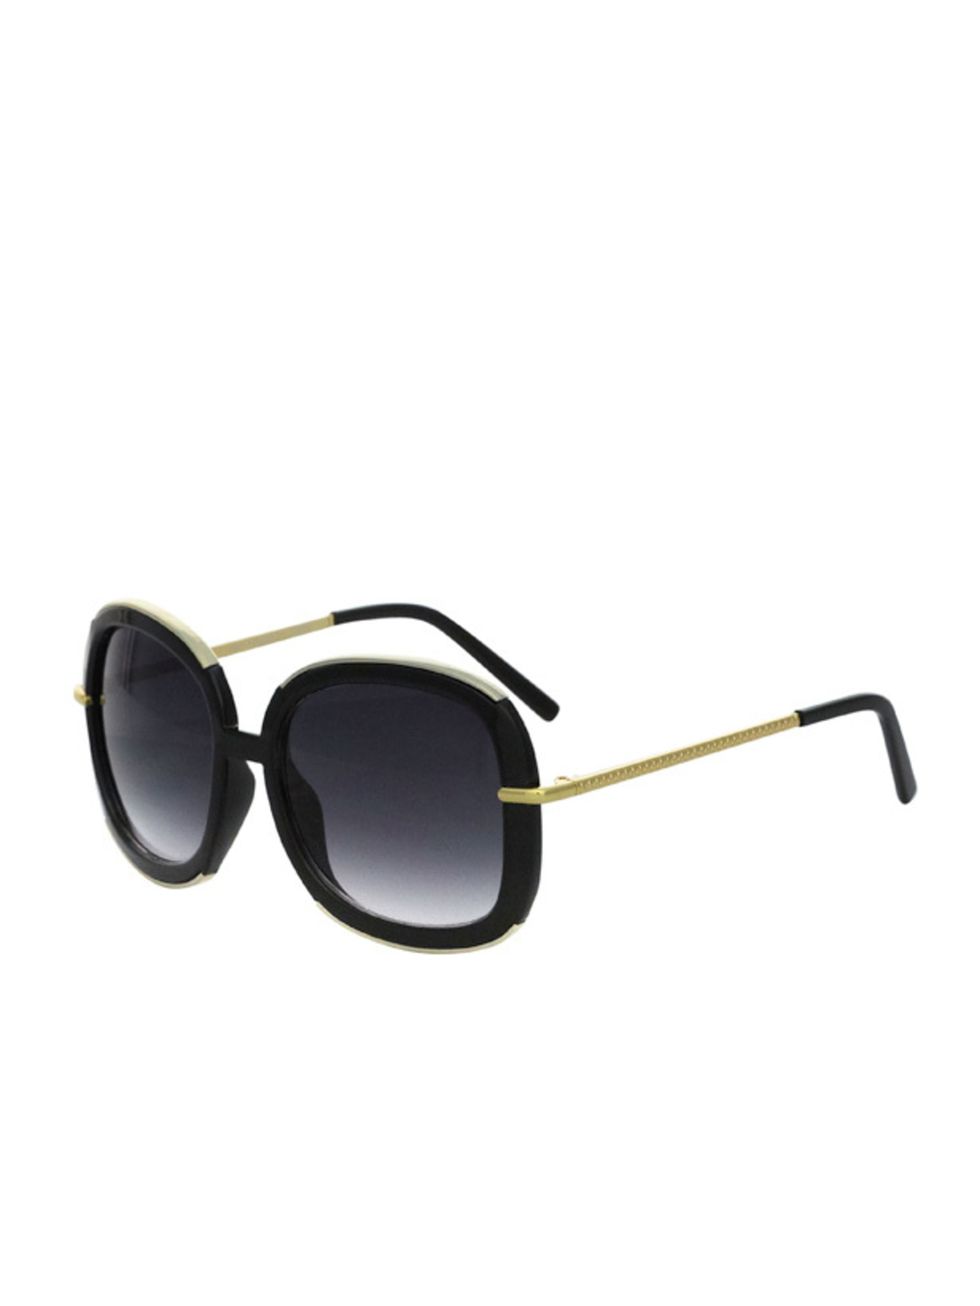 <p>Oversized oval sunglasses, £15, by <a href="http://www.next.co.uk/shopping/women/search/87/14?extra=sch&amp;n=women&amp;pid=718-432&amp;exclude=00F00%7C00FS00&amp;returnurl=%2Fshop%2Fgattcolour-black-gattbrand-next-cat-sunglasses-gattgender-women-0%3Fx